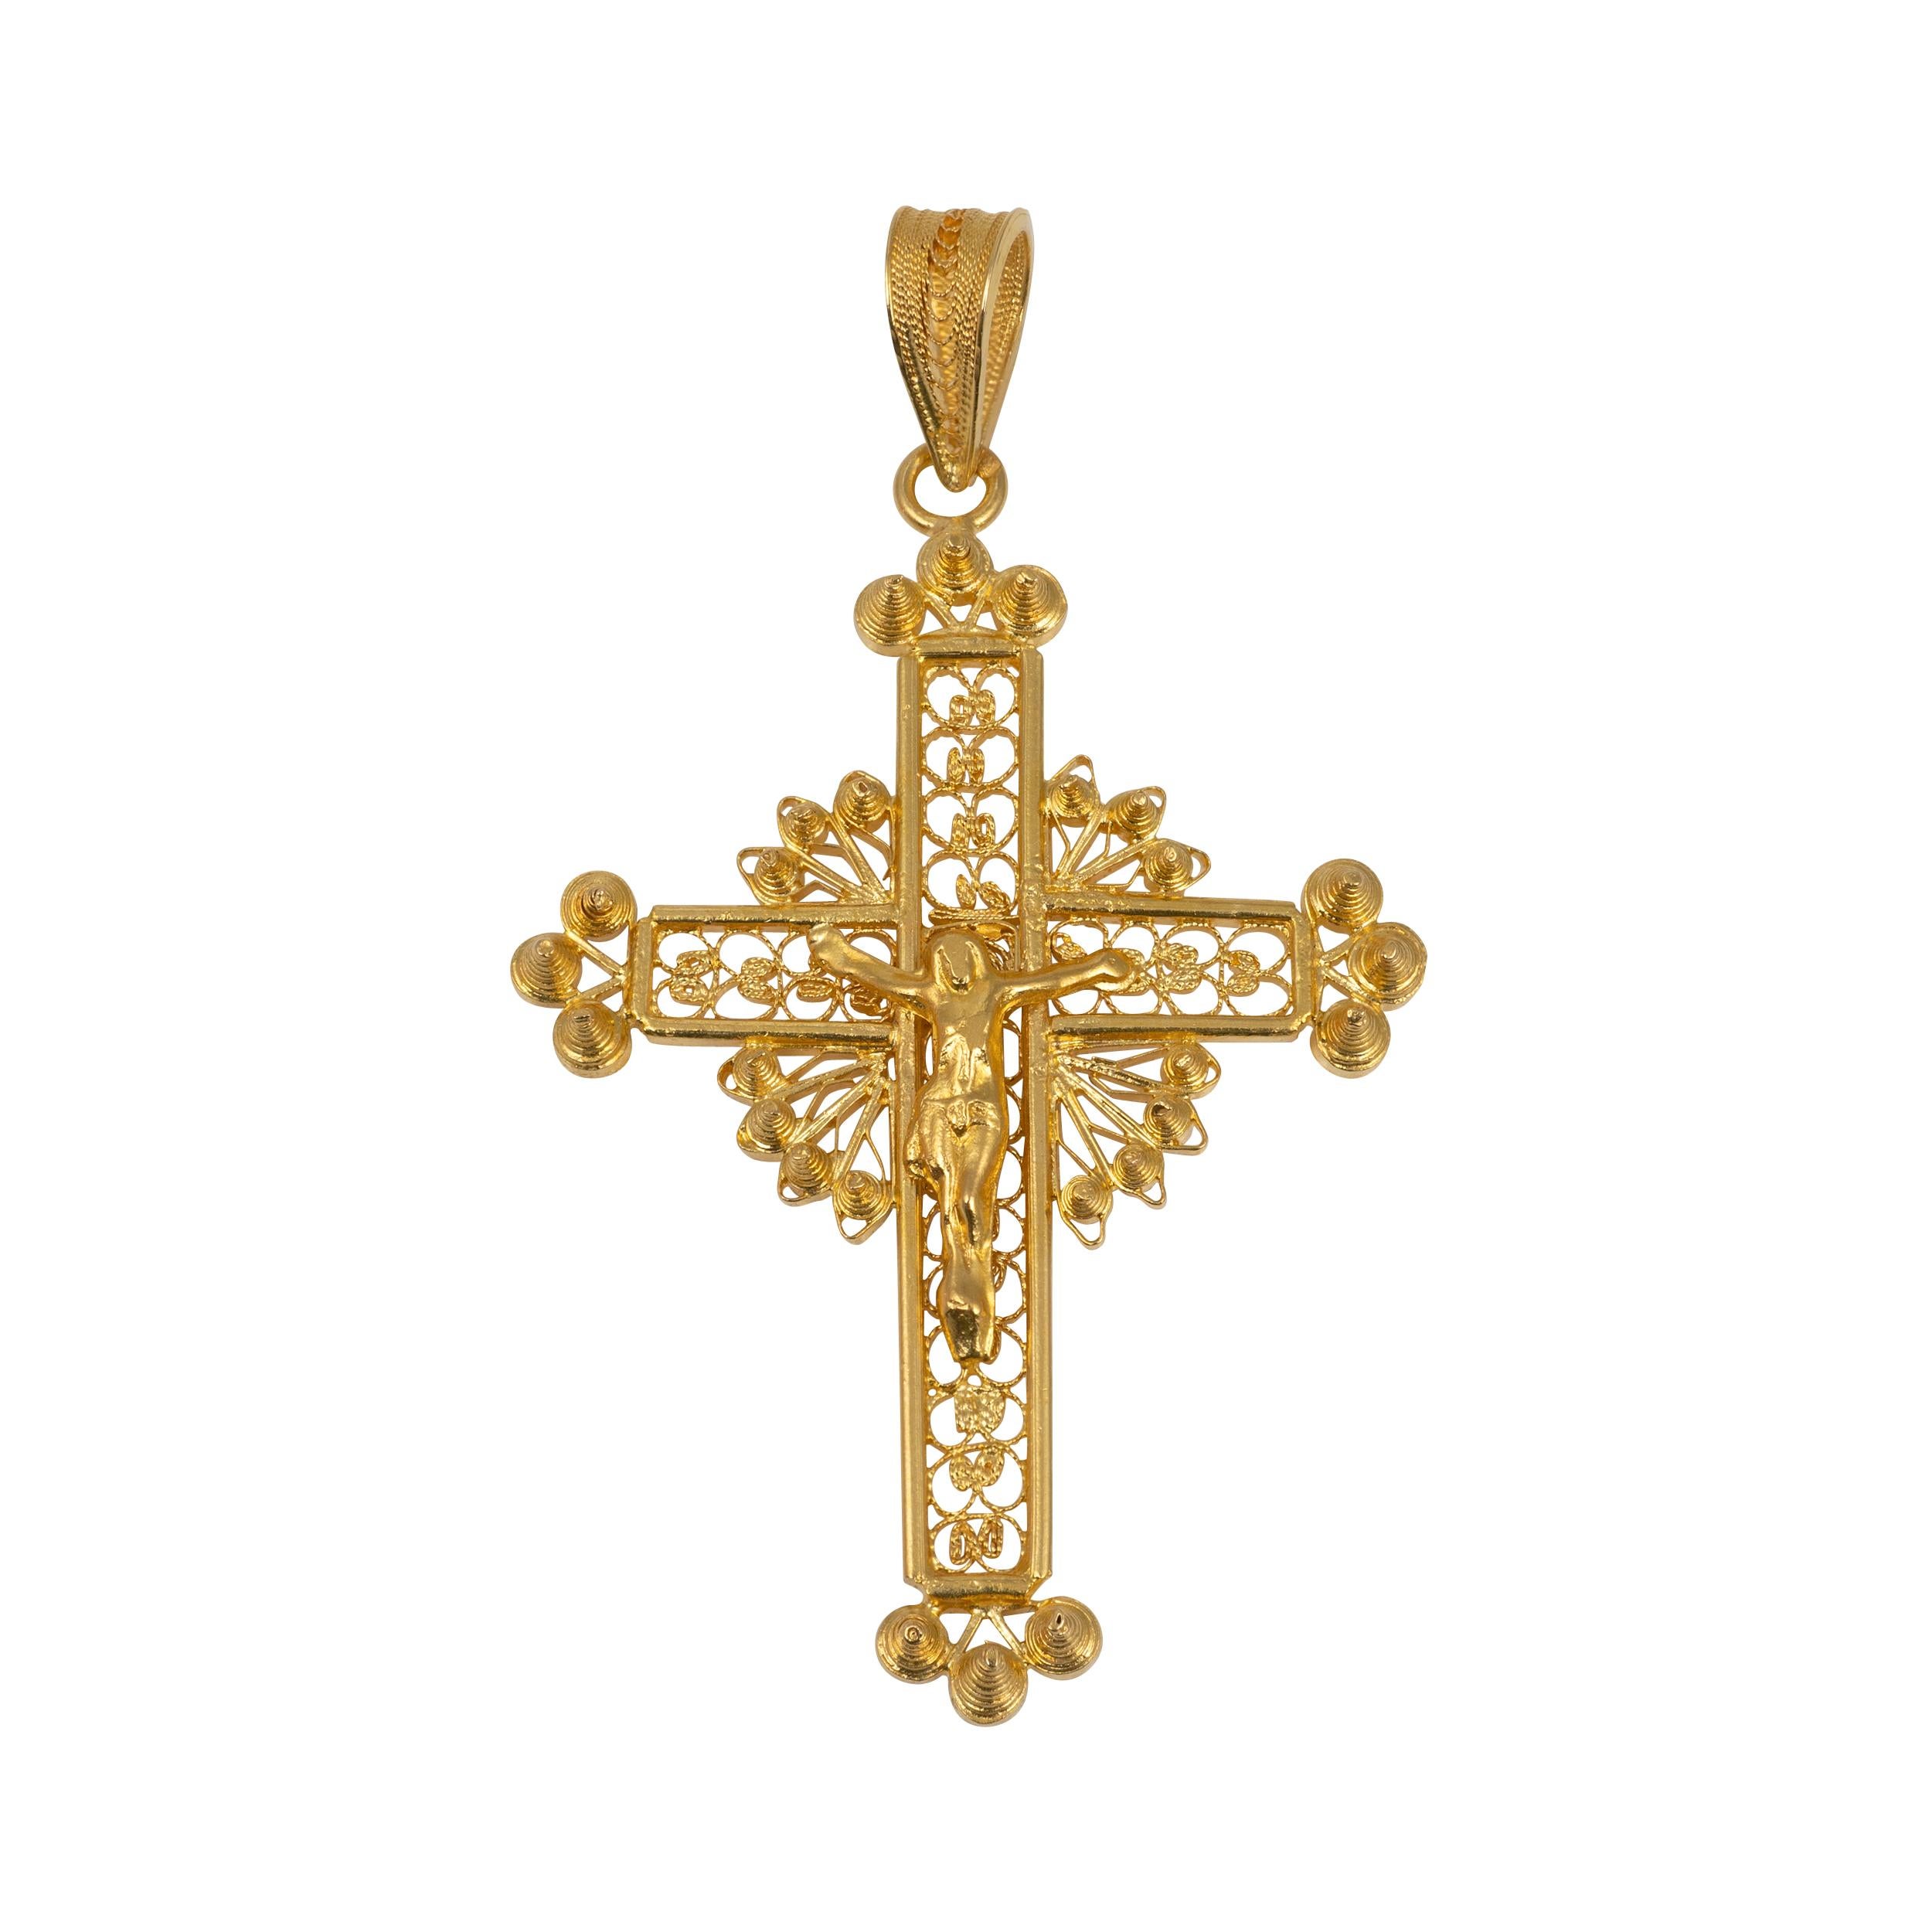 Gold Crucifix Pendant 19.2 Karat Yellow Gold, Portuguese circa 1970s Vintage